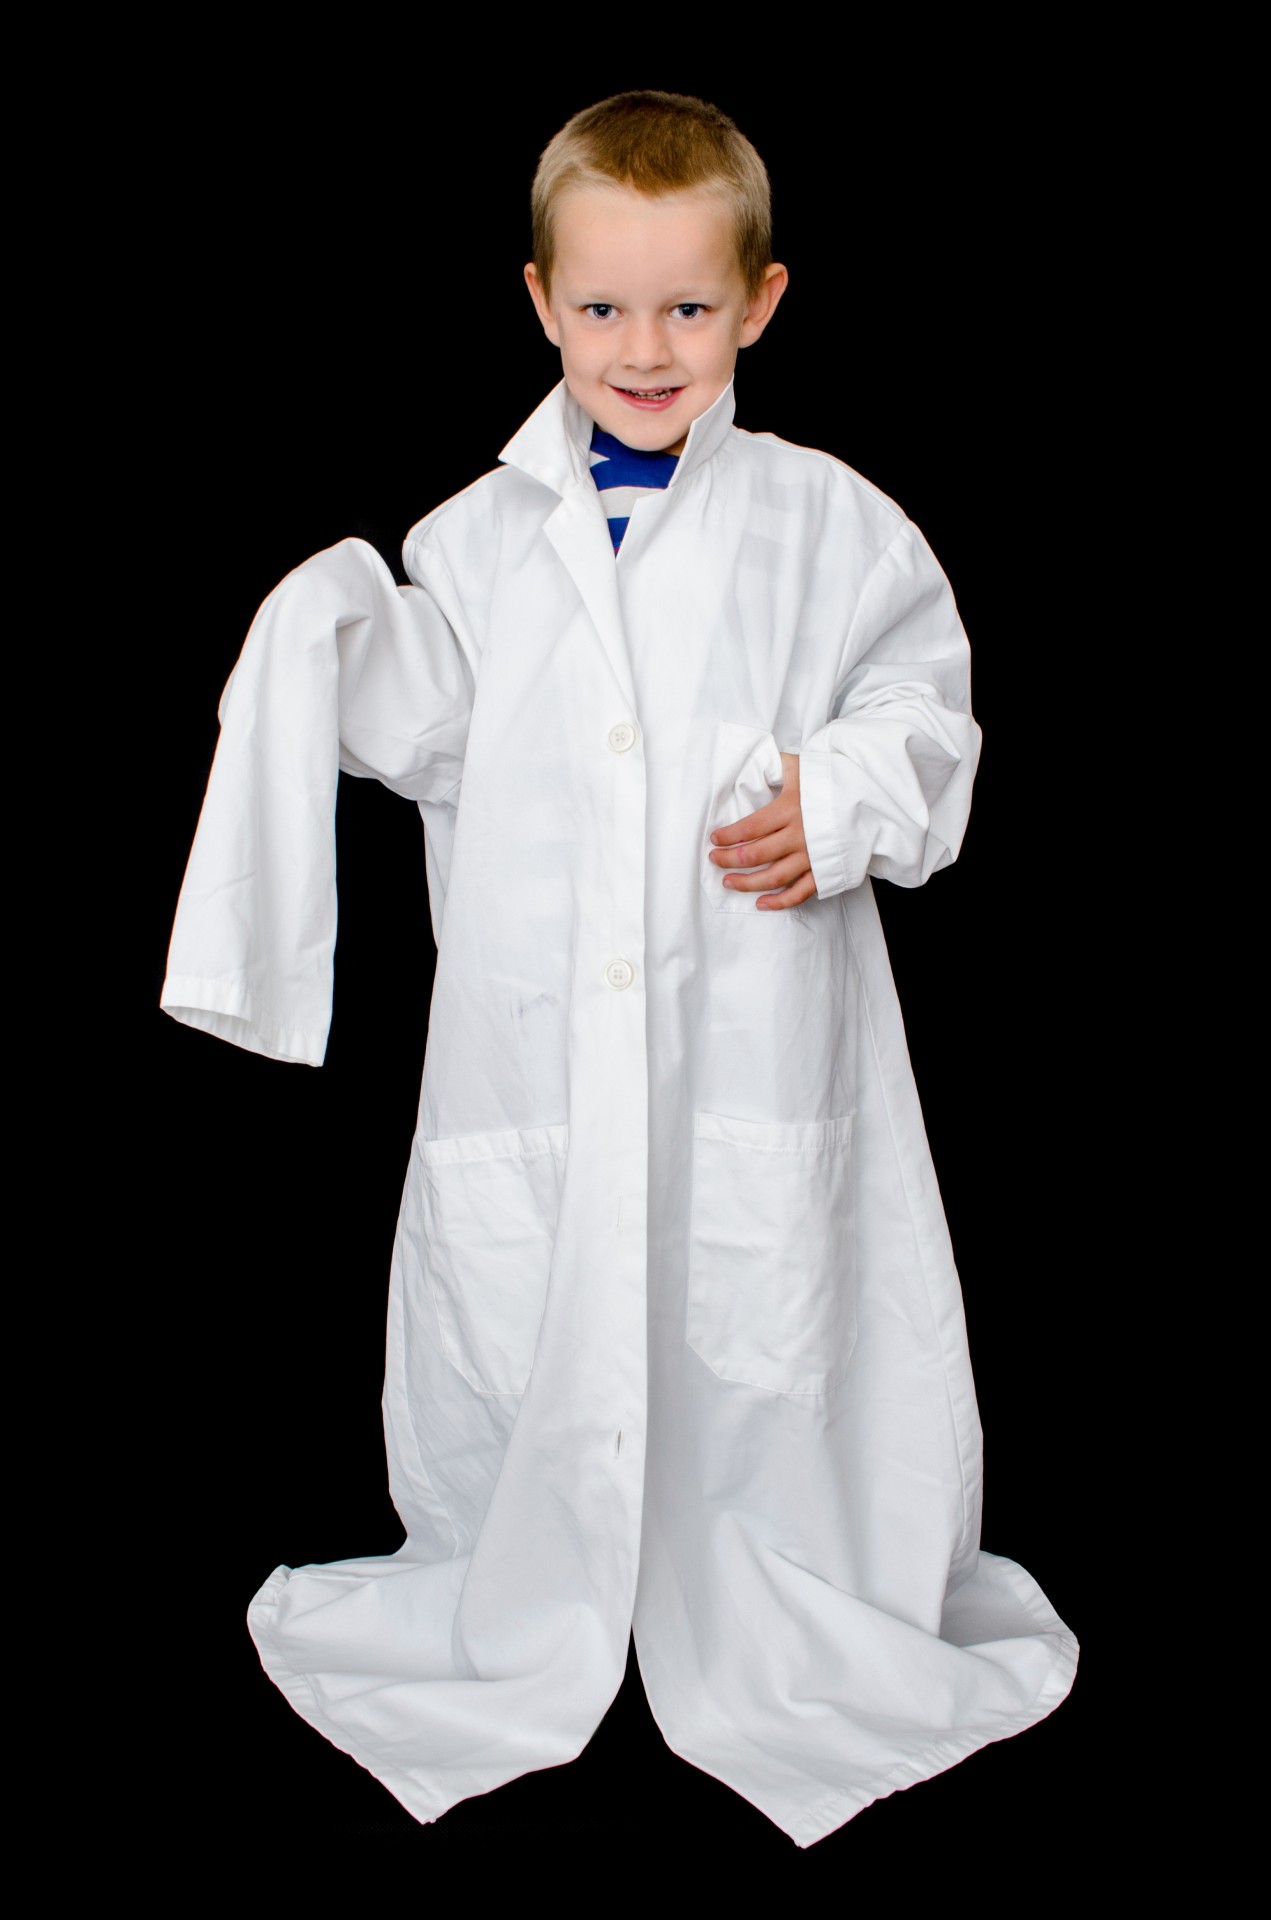 Ребенок в белом халате врача